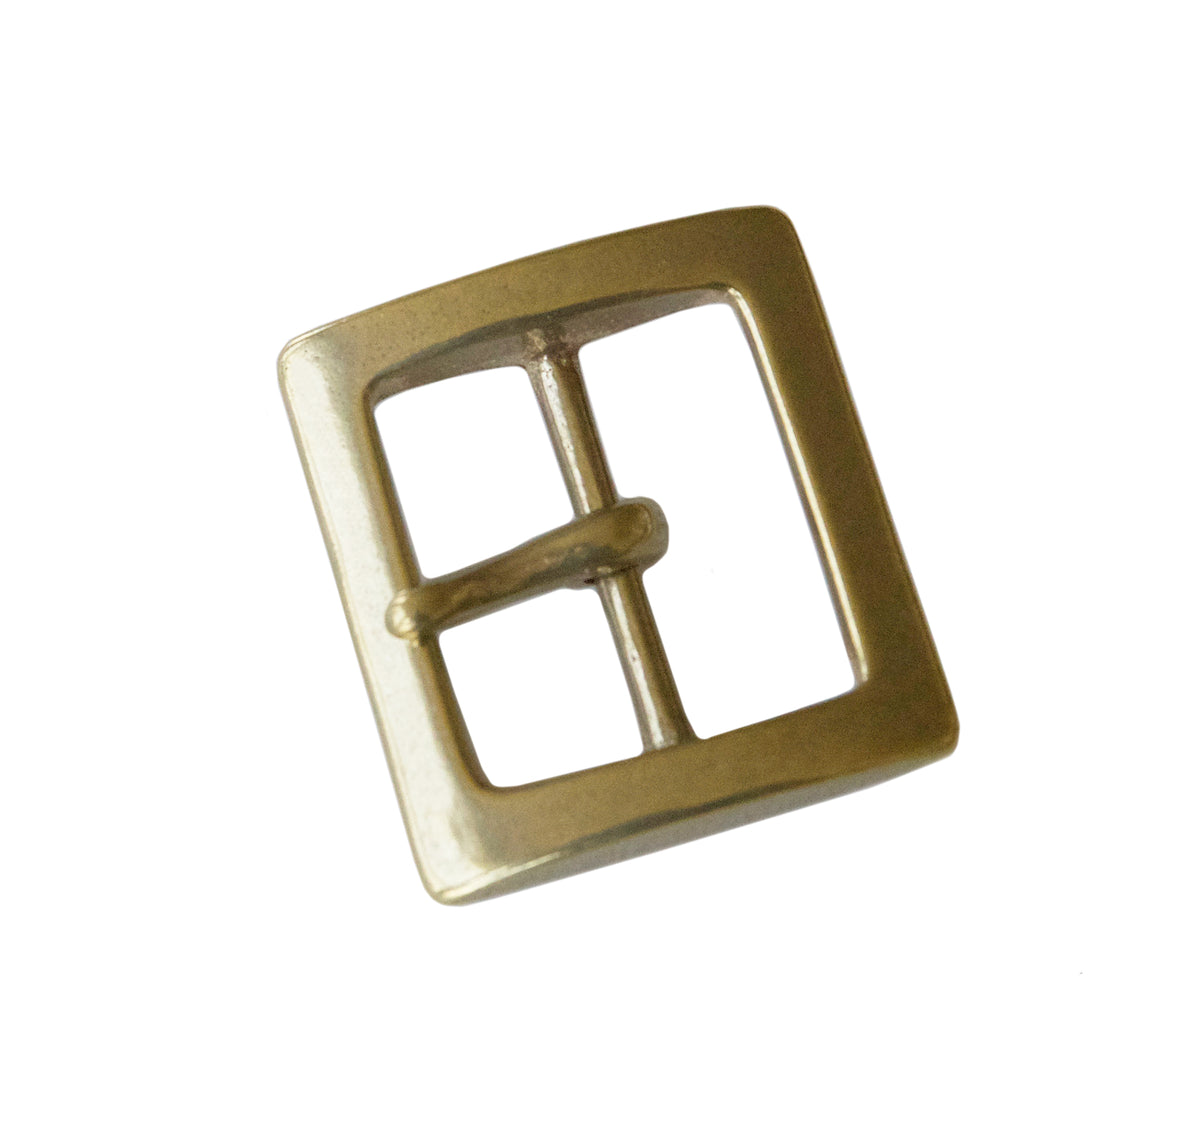 Japan Brass Co 🇯🇵 - "Square" Belt Buckle (Solid Brass)